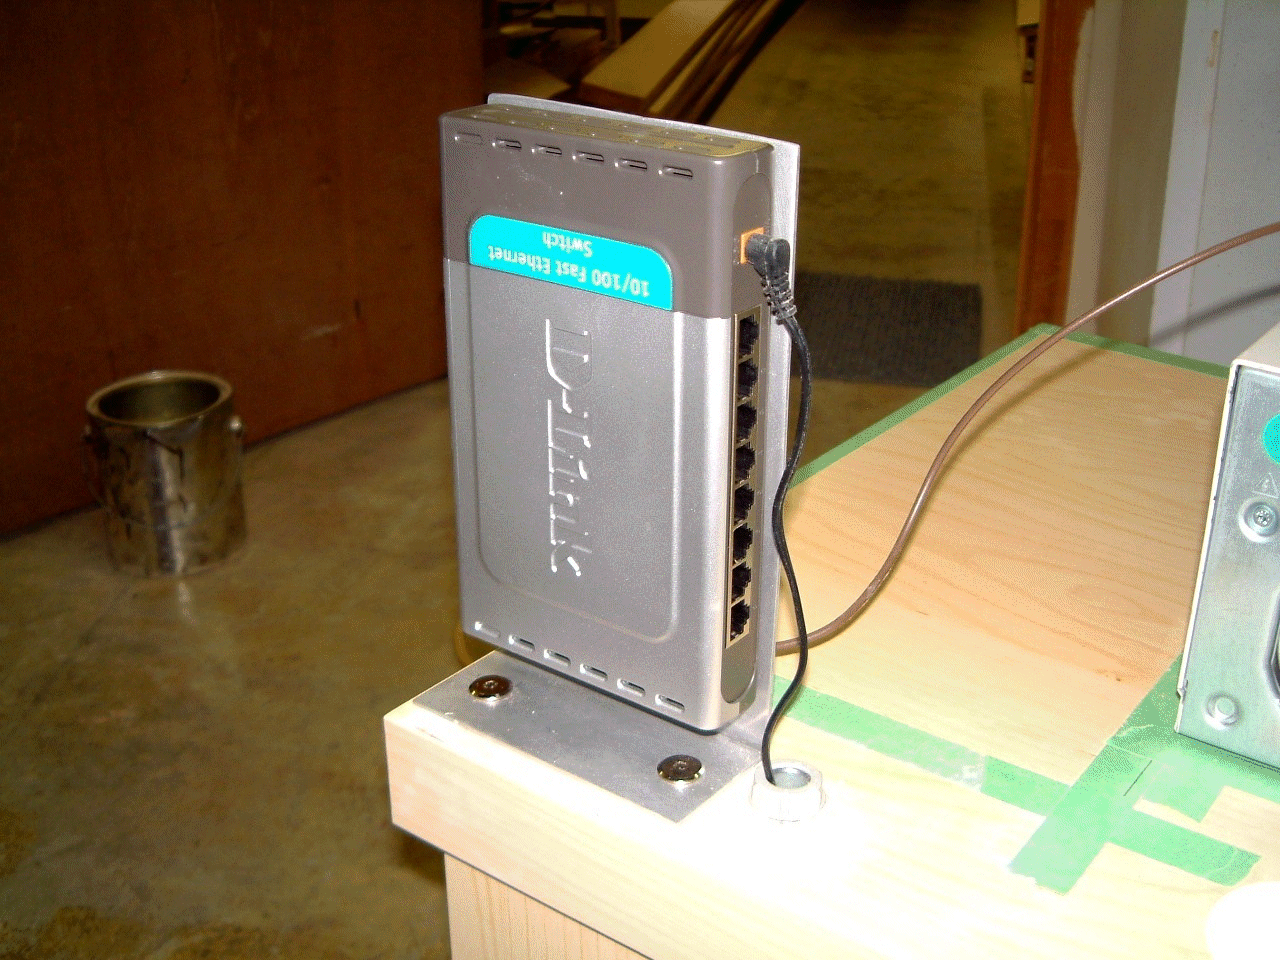 Description: Vertically mounted D-Link unit - on new computer cart